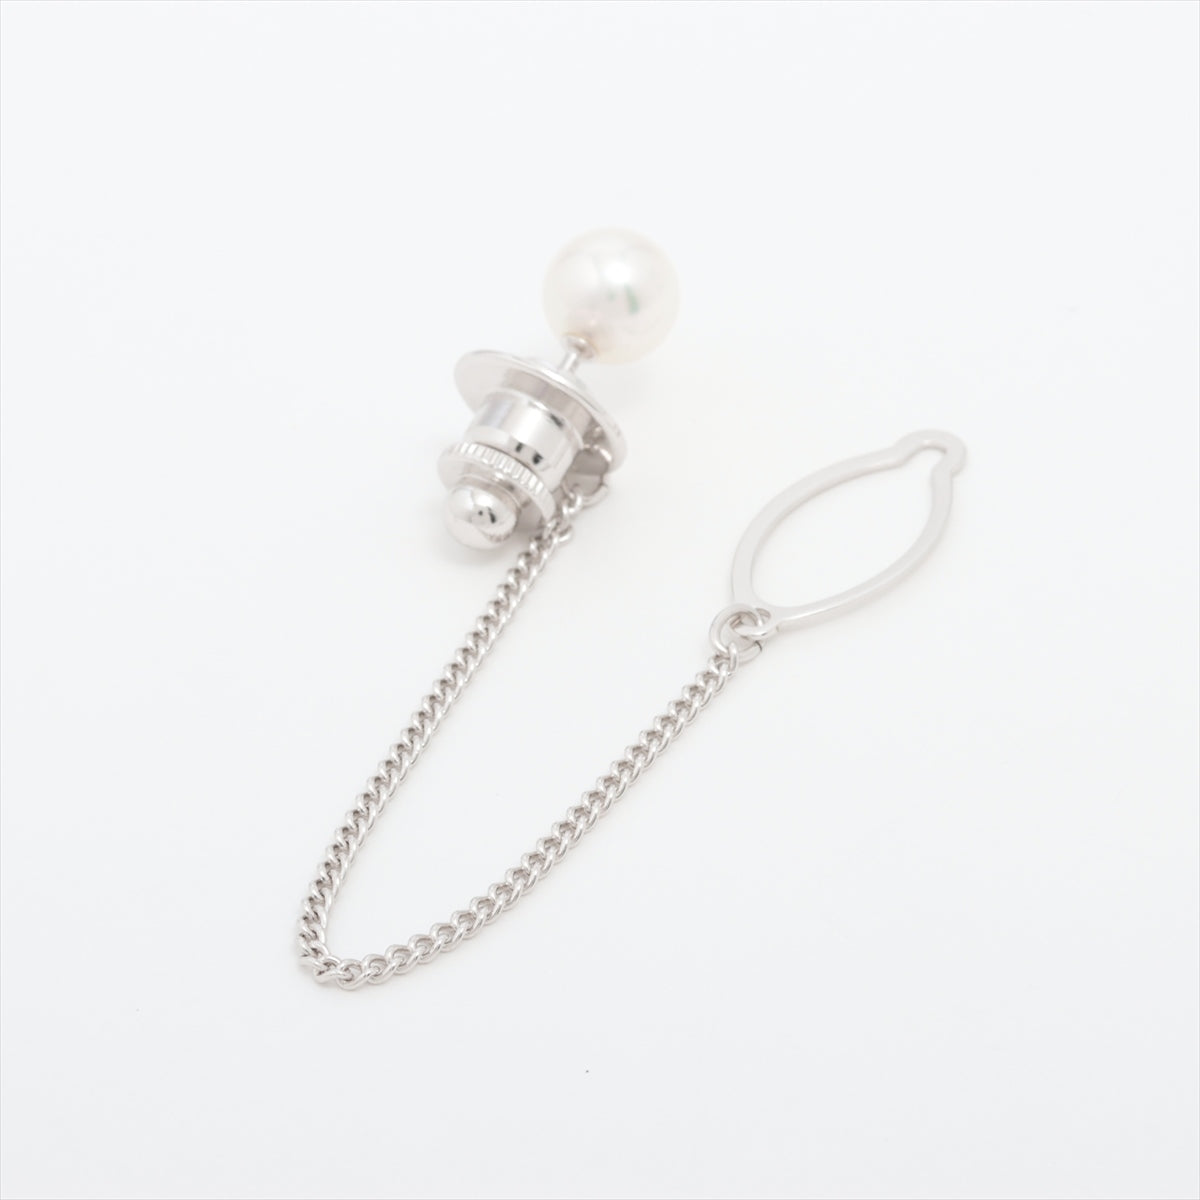 Mikimoto Pearl Tie tack K18(WG) 0.7g Approx. 7.0 mm